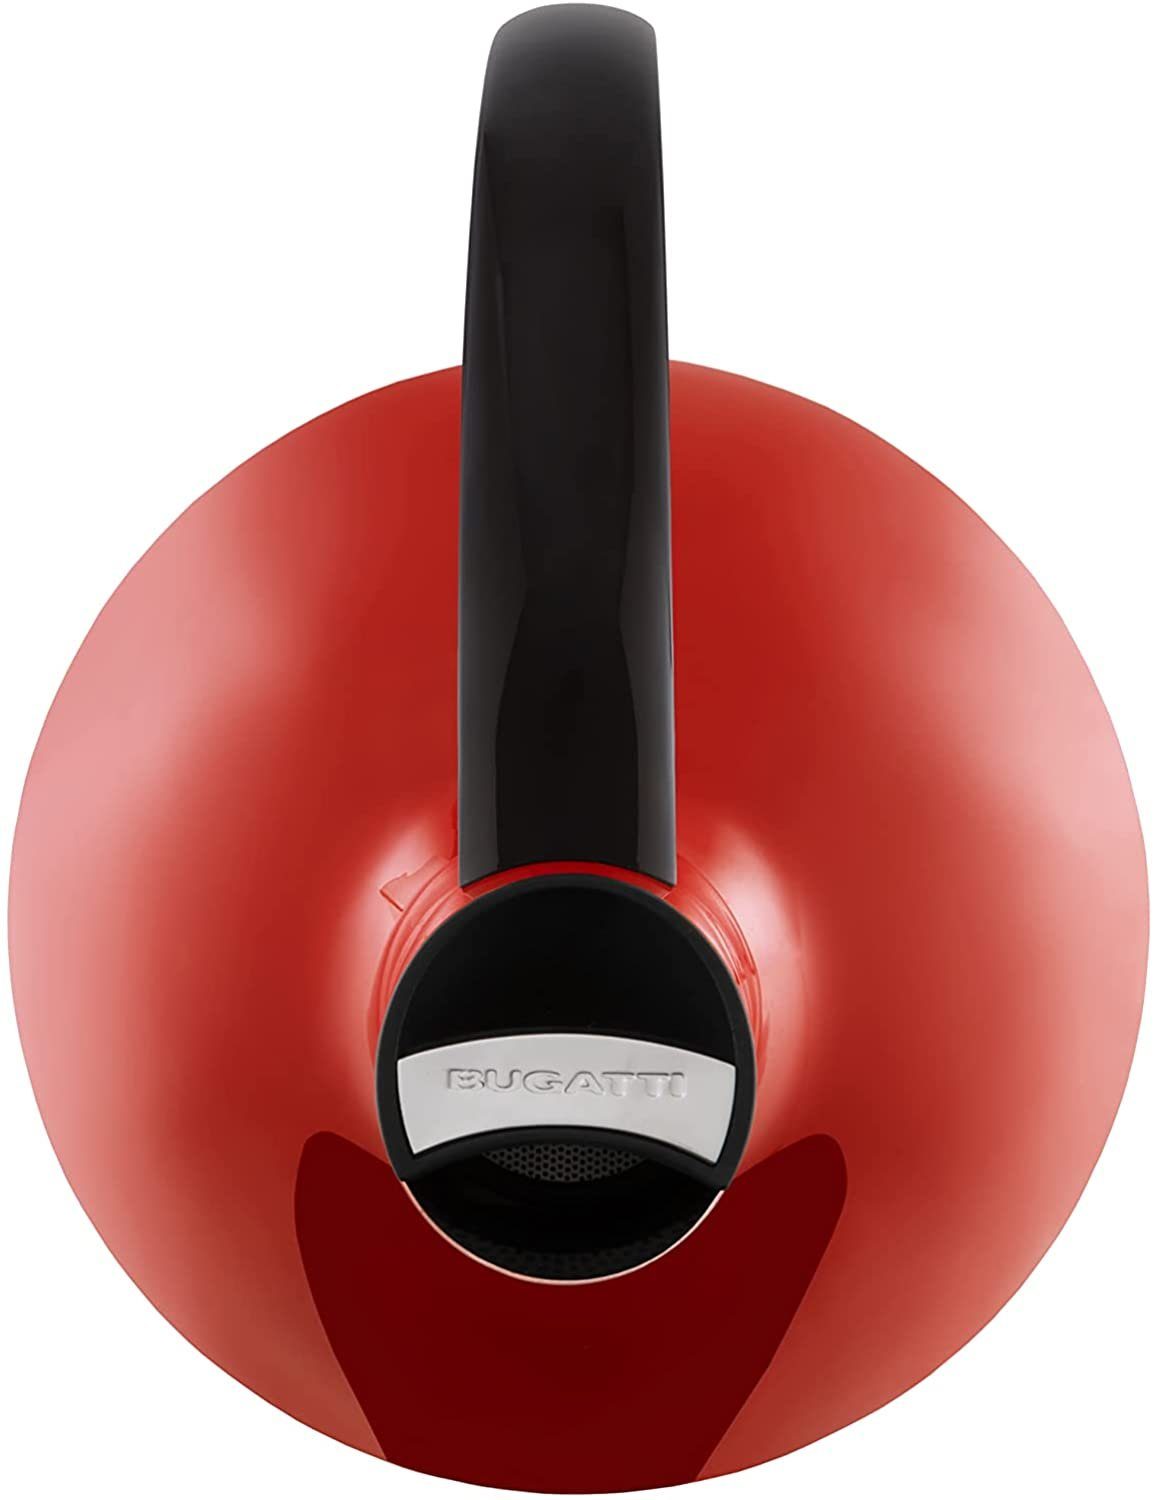 Casa Bugatti Giulietta Design-Wasserkocher Rot Wasserkocher